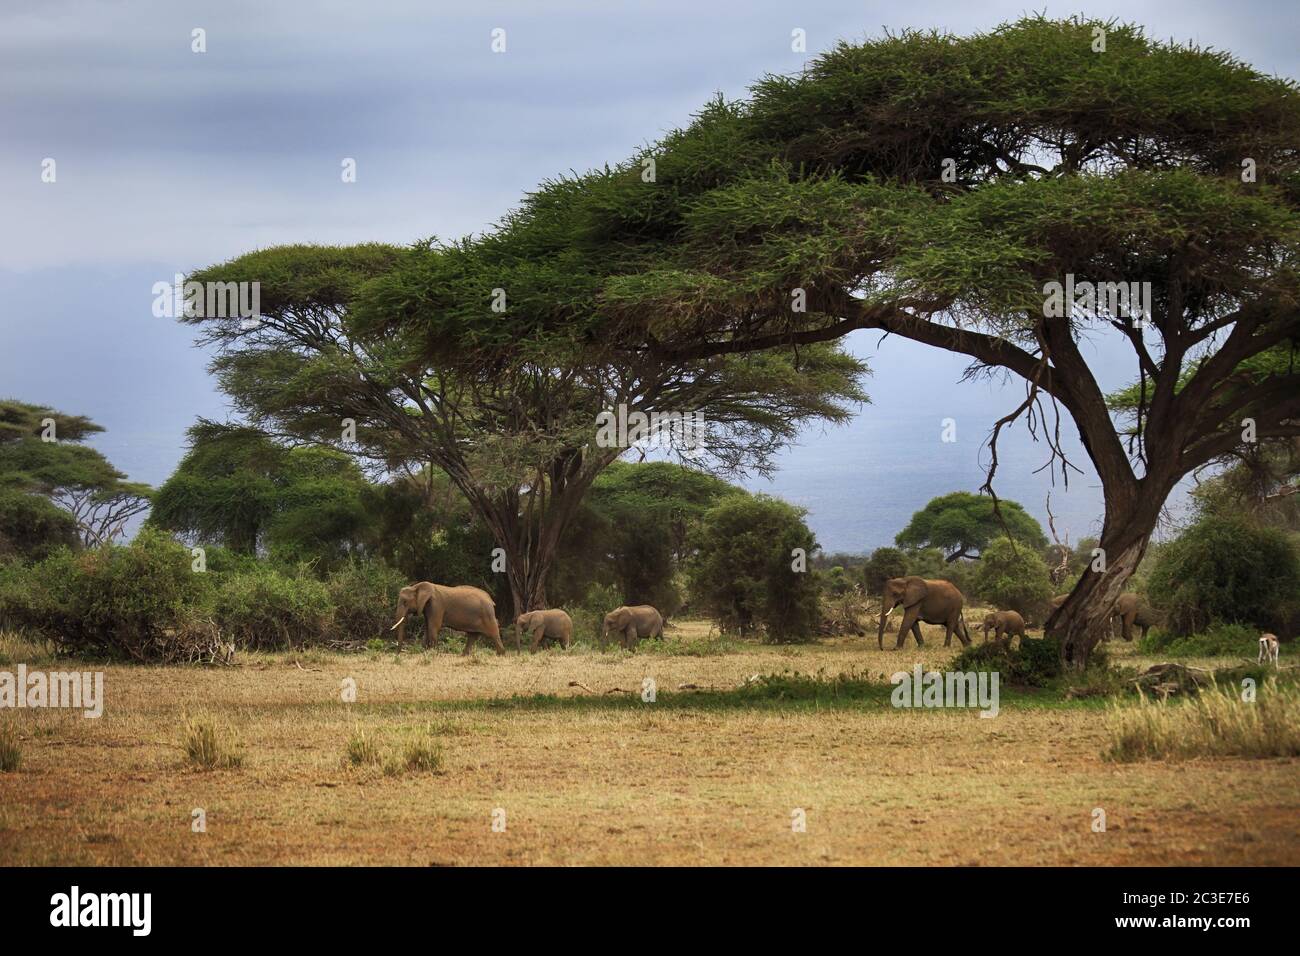 Elephants in Amboseli national park in Kenia Stock Photo